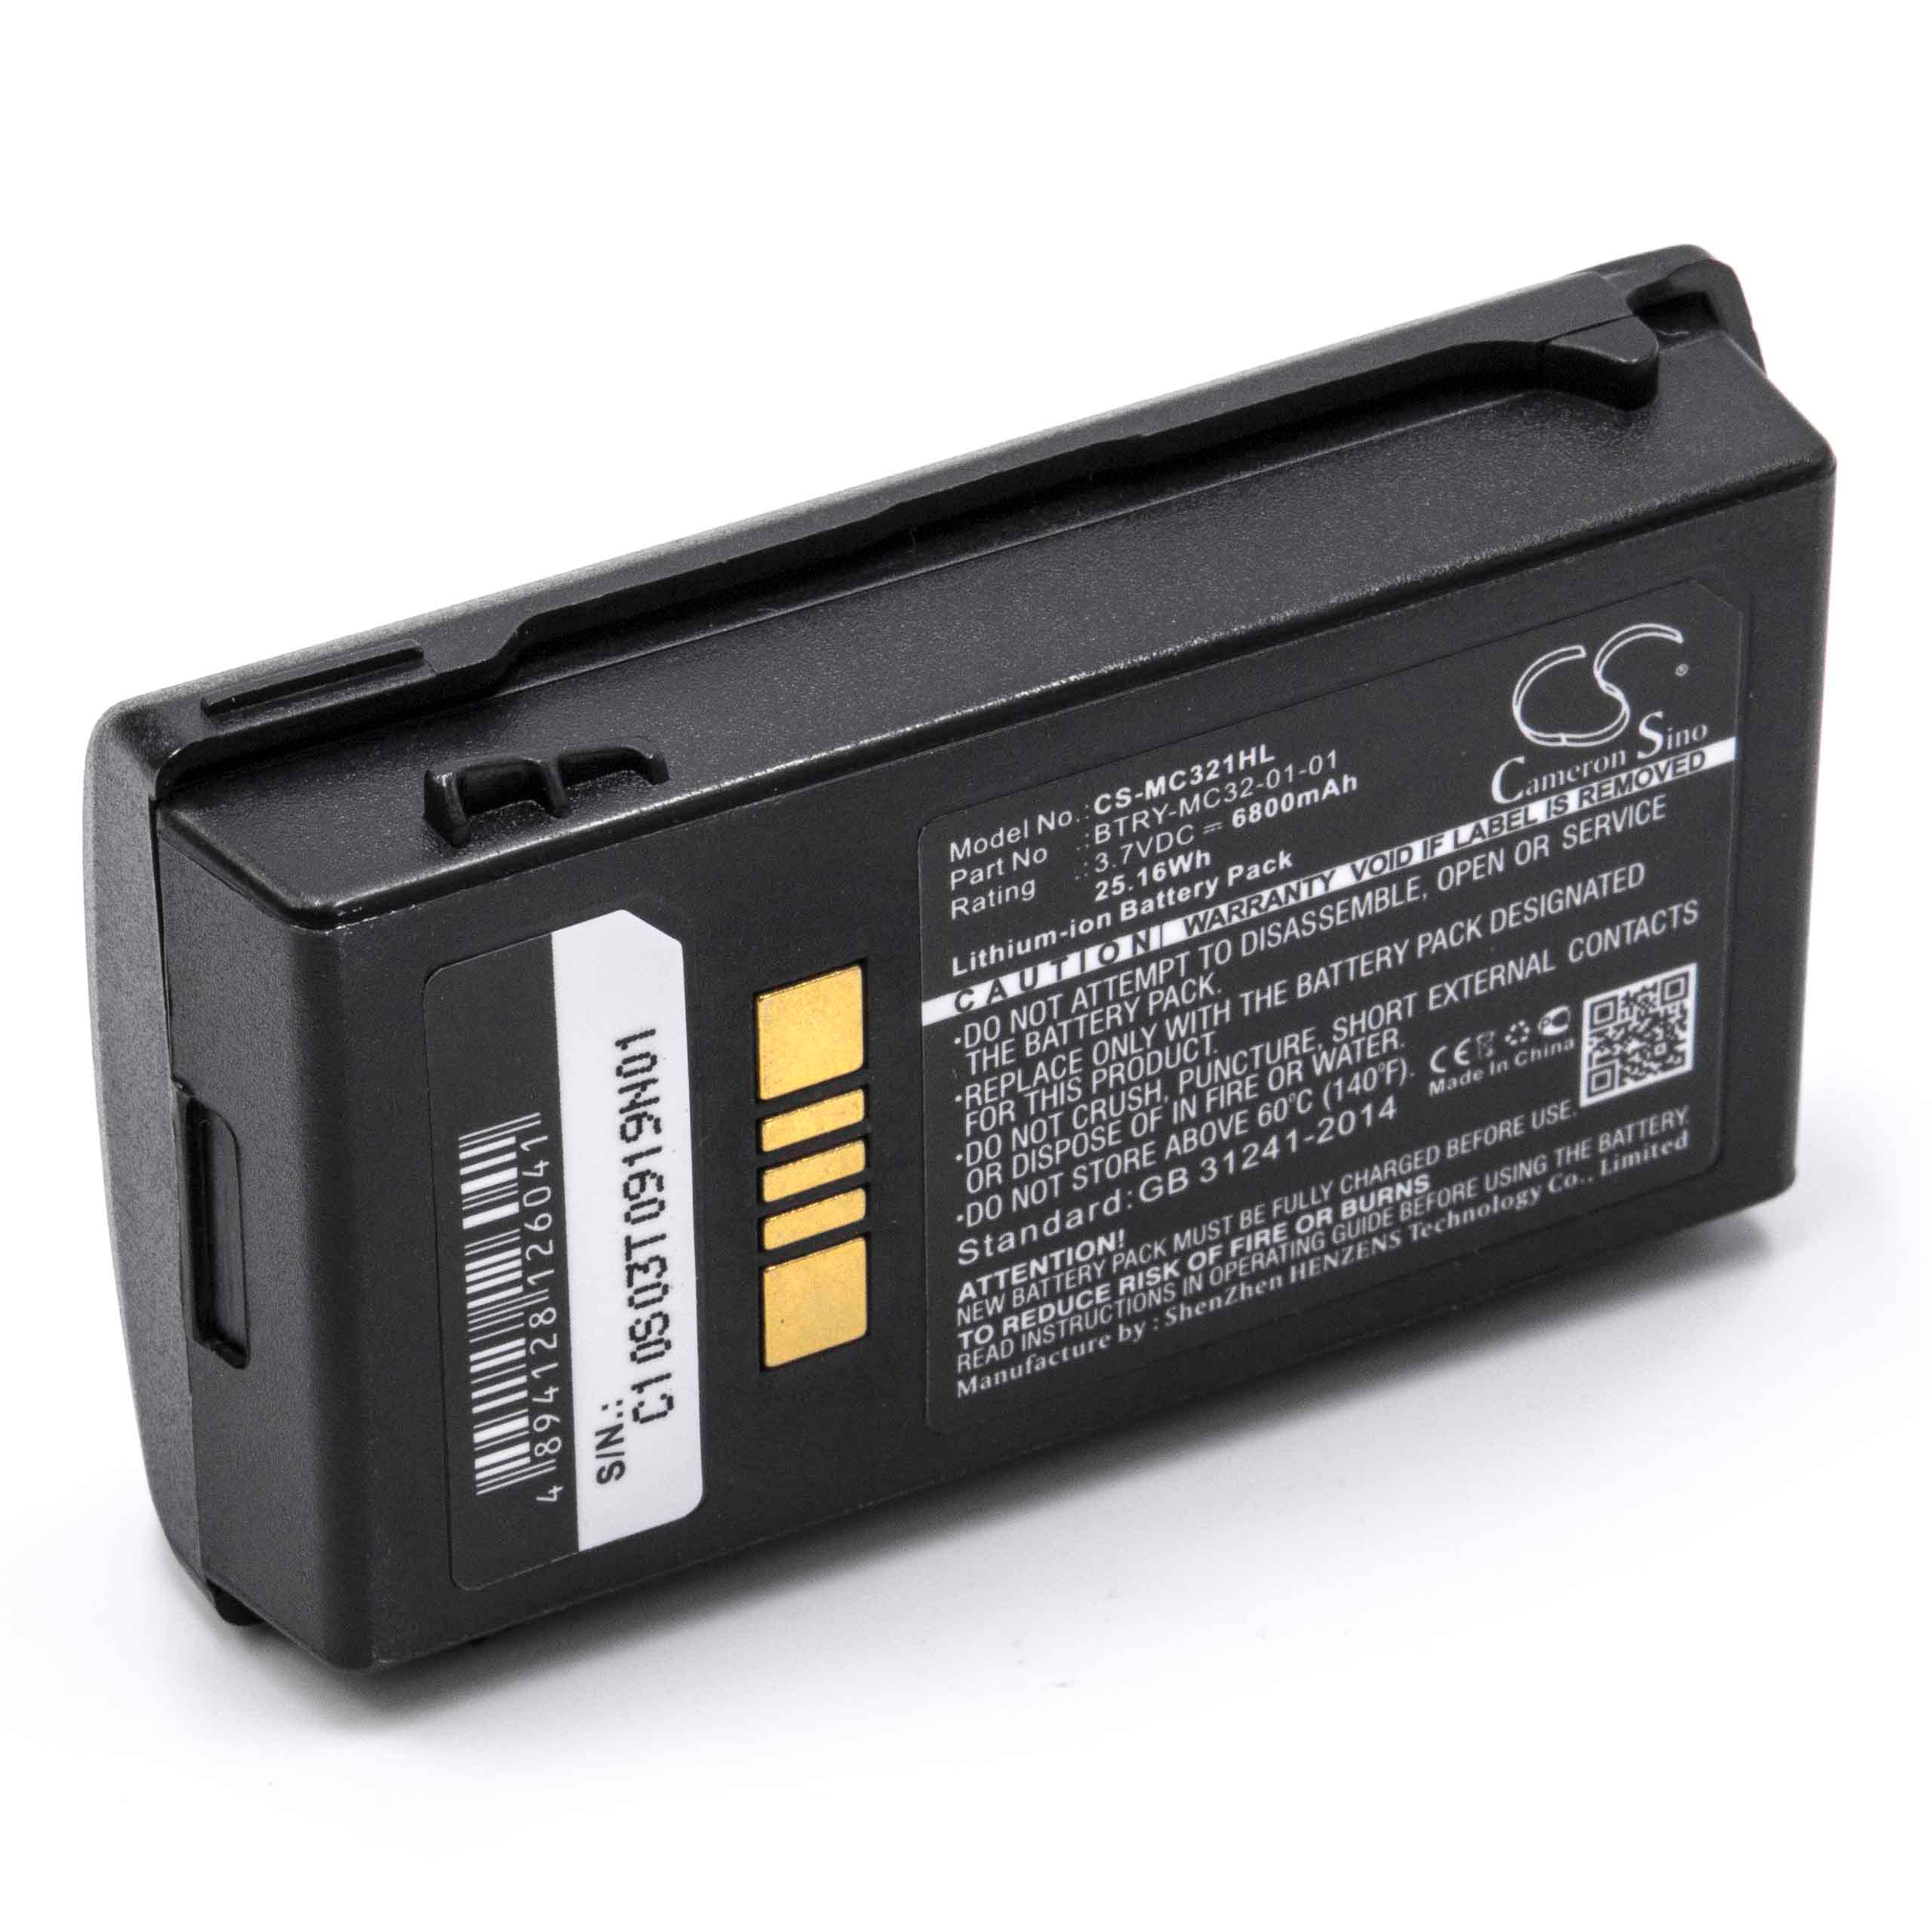 Barcode Scanner POS Battery Replacement for Motorola BTRY-MC32-01-01 - 6800mAh 3.7V Li-Ion